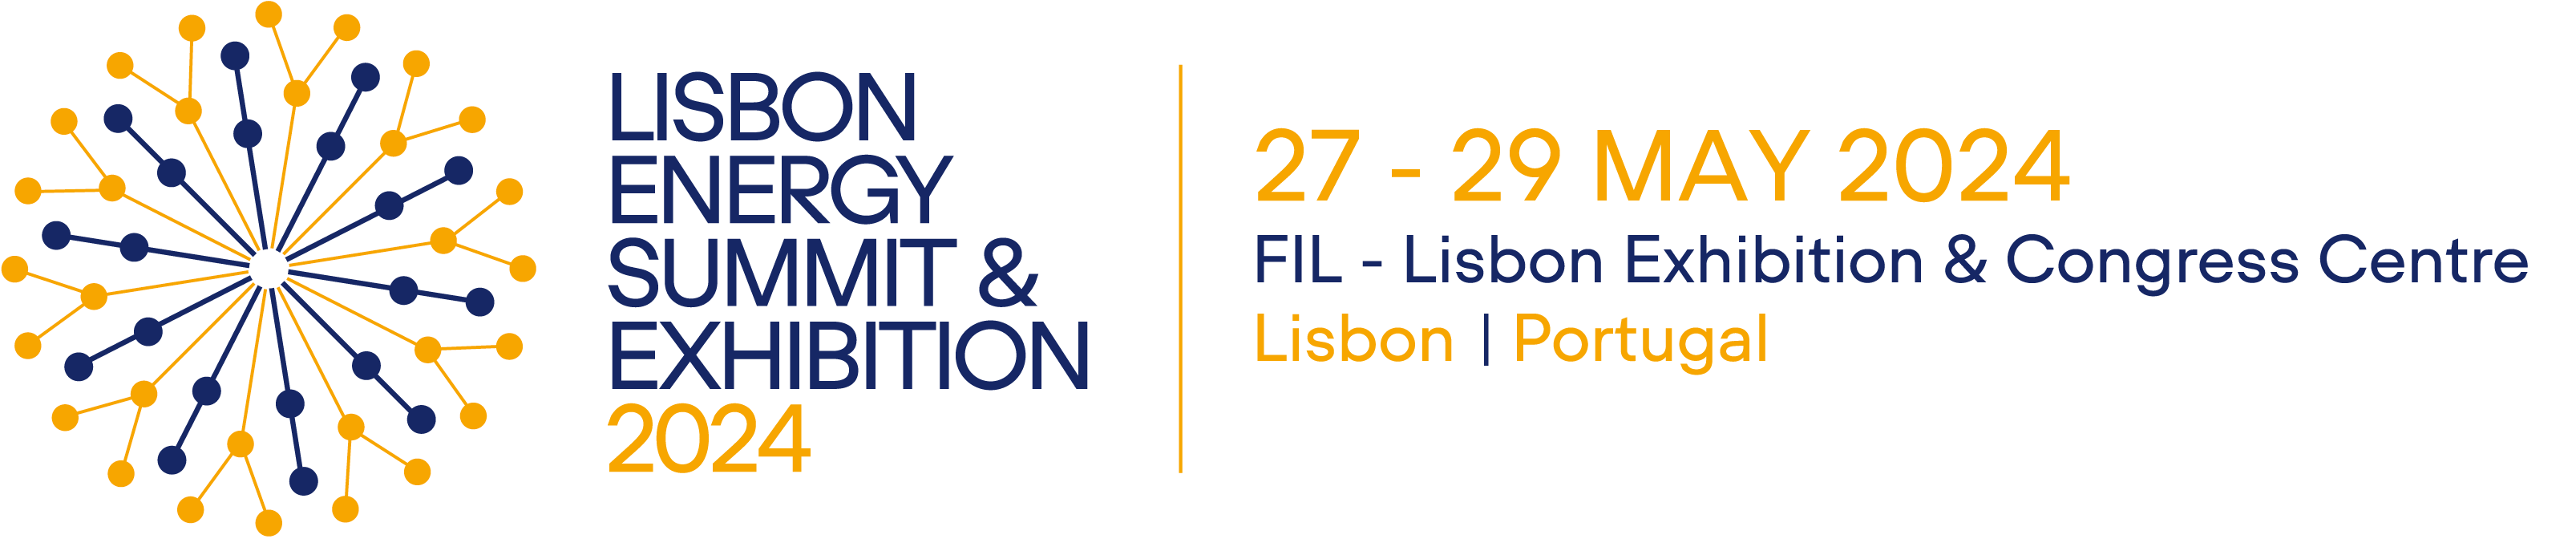 Lisbon Energy Summit Logo